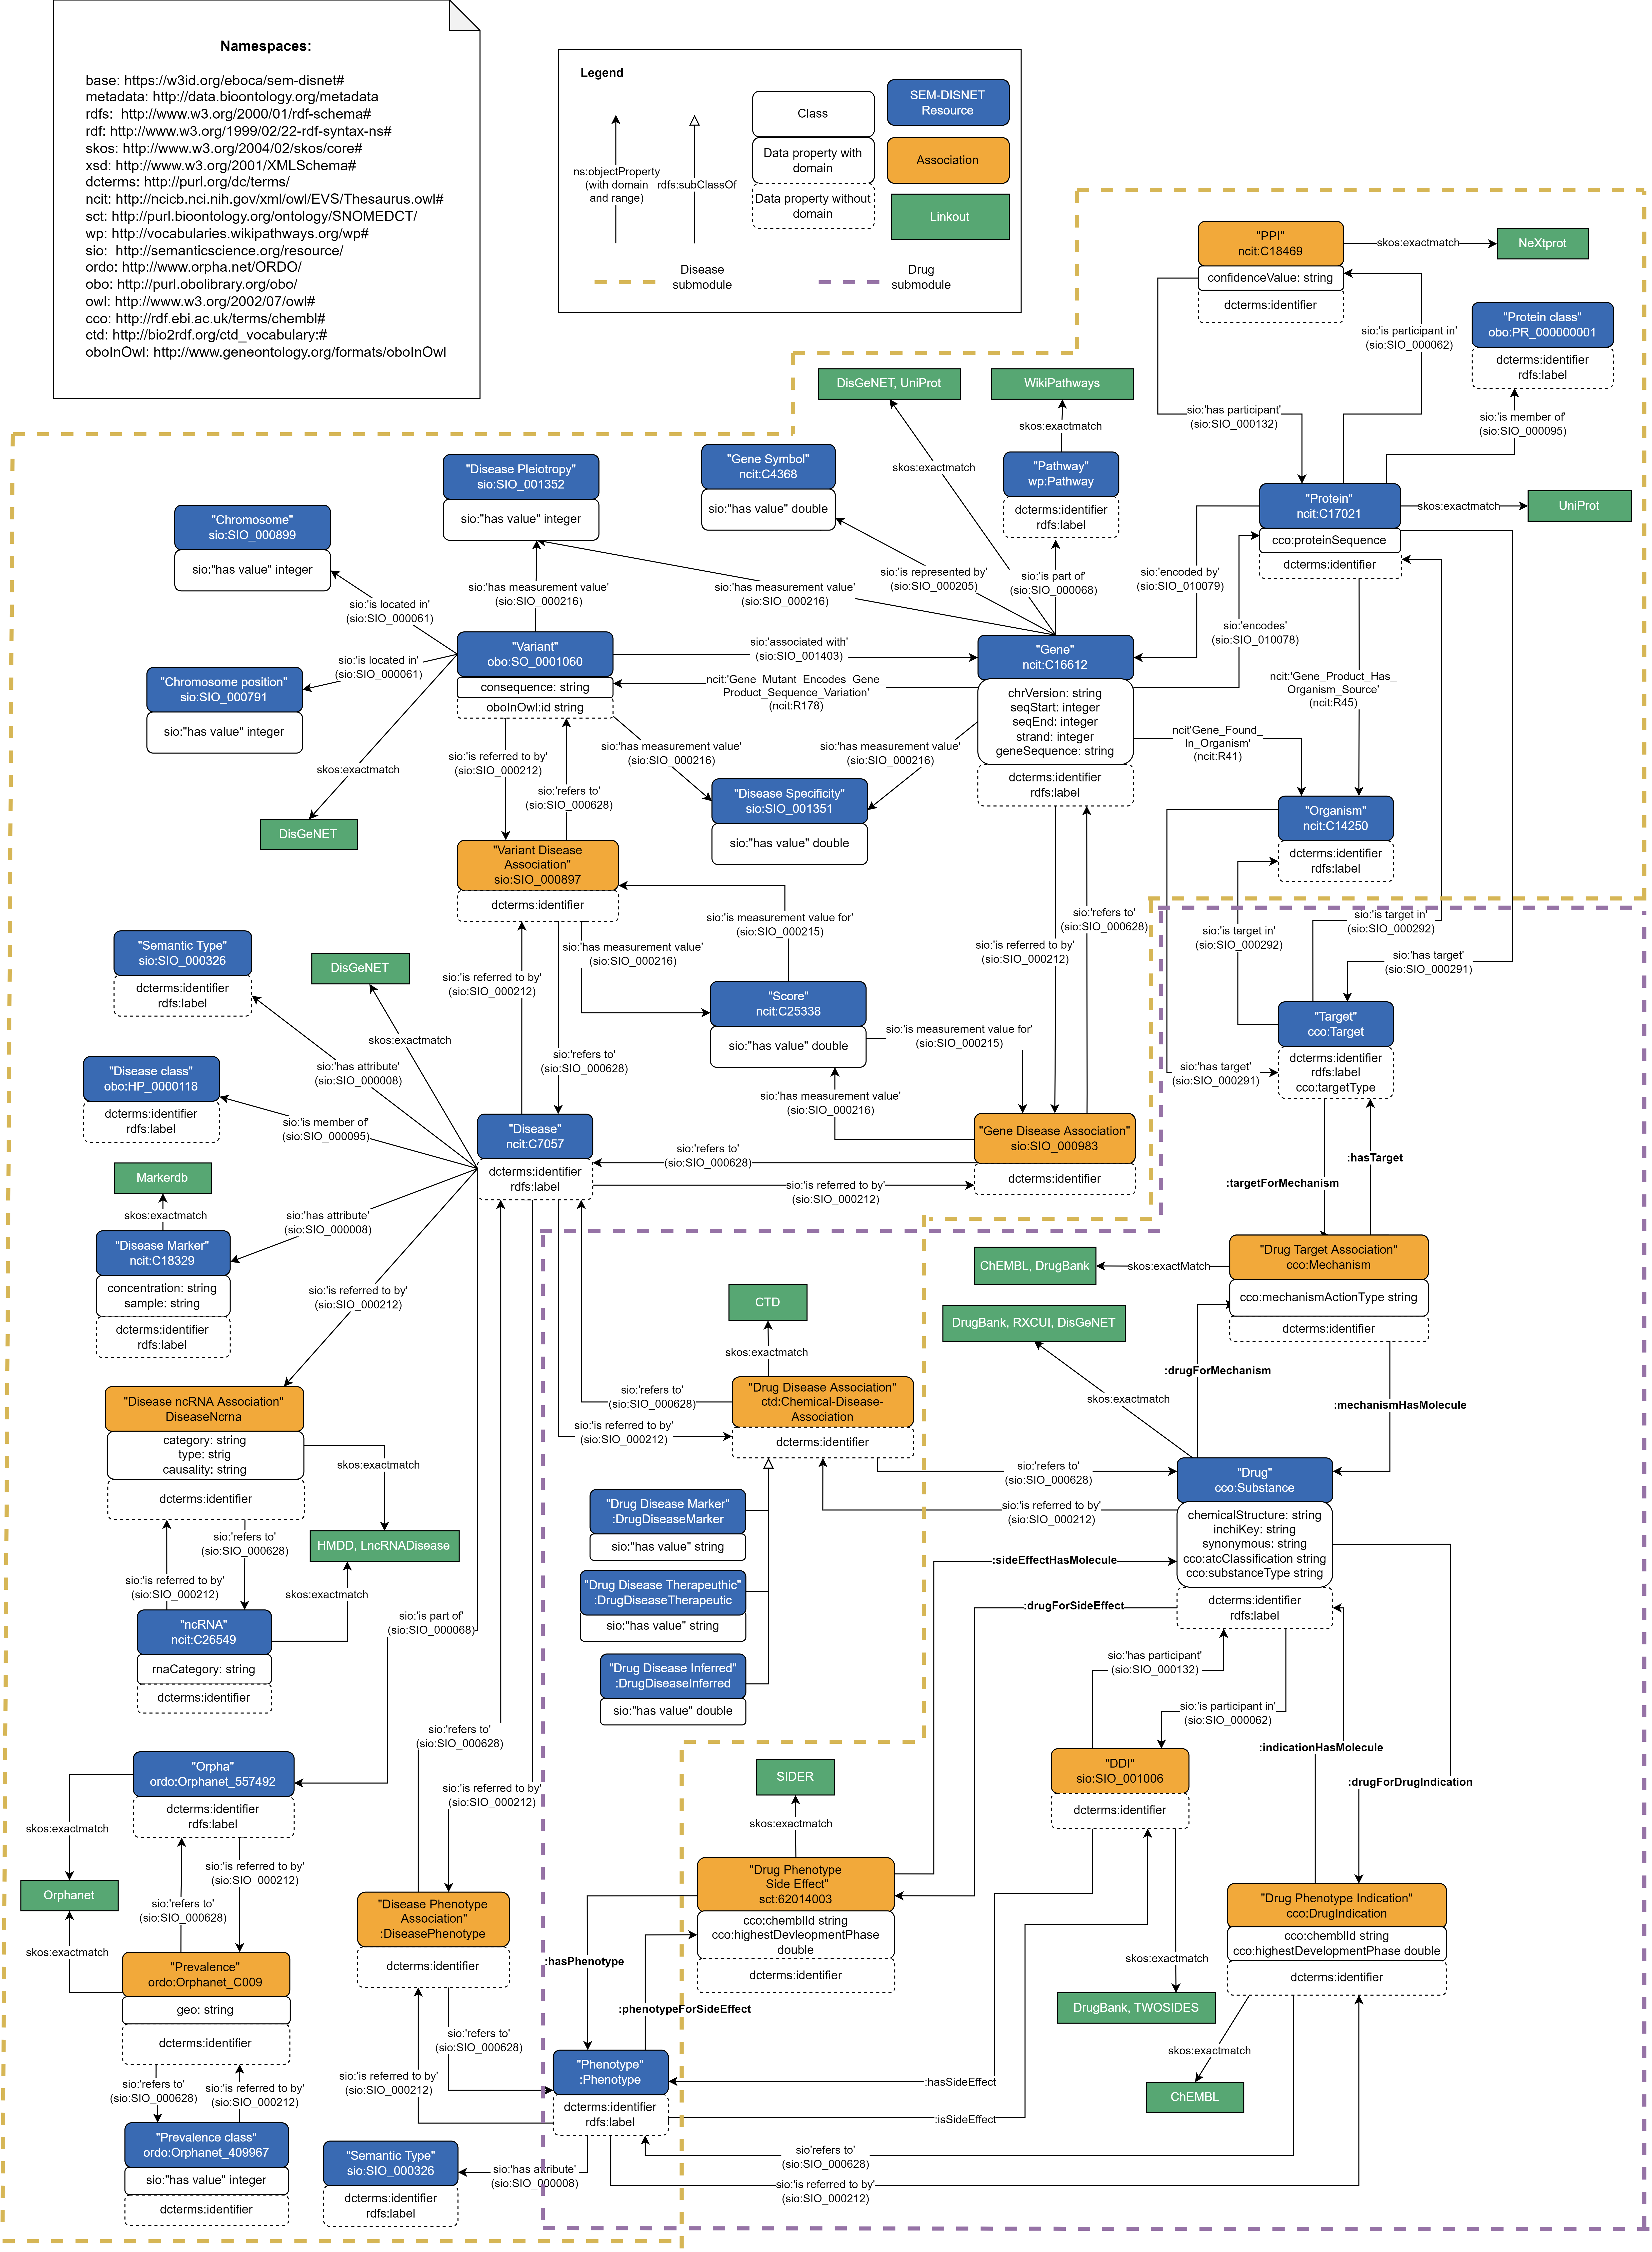 diagrams/SEM-DISNET_ontology.png